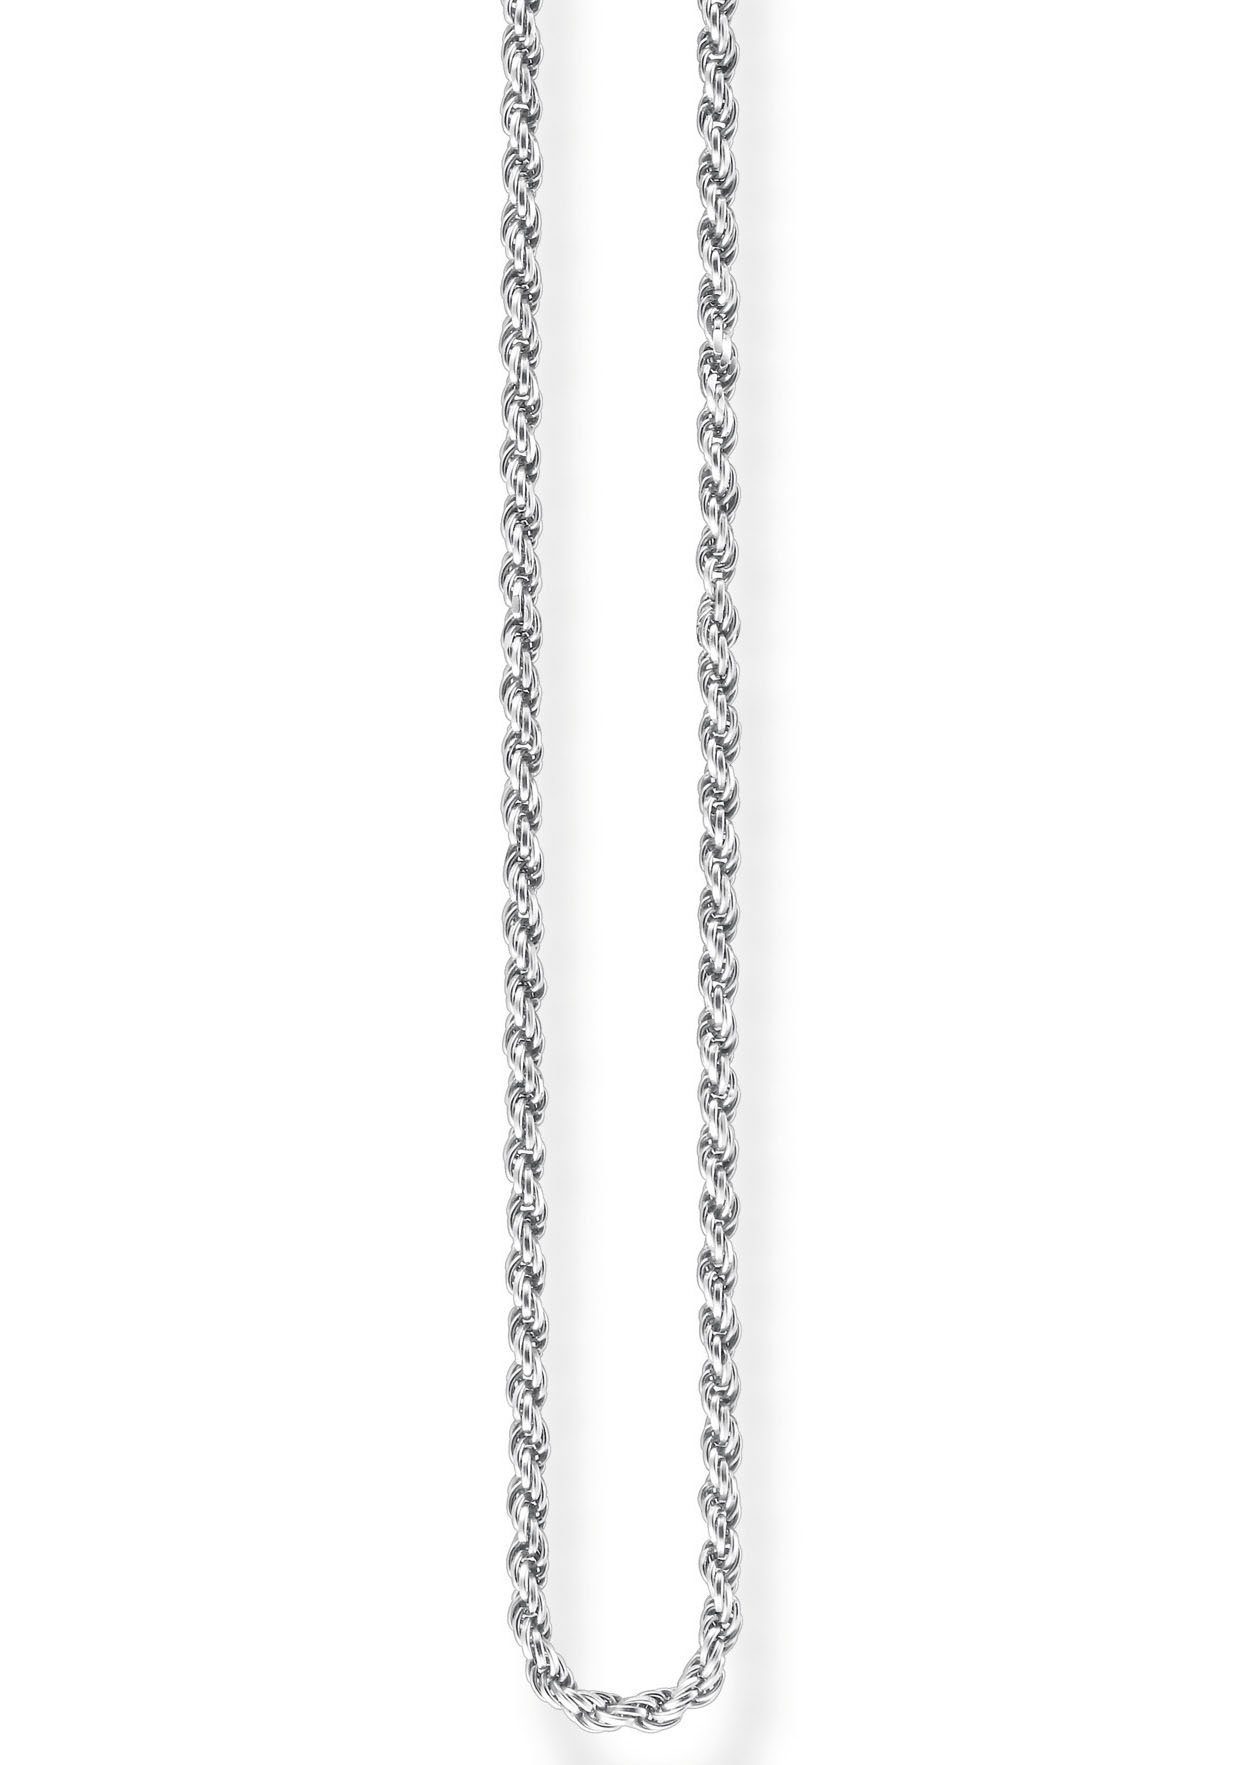 THOMAS SABO Silberkette Kordelkette, KE1348-001-12-L40, KE1348-001-12-L50,  In verschiedenen Längen erhältlich